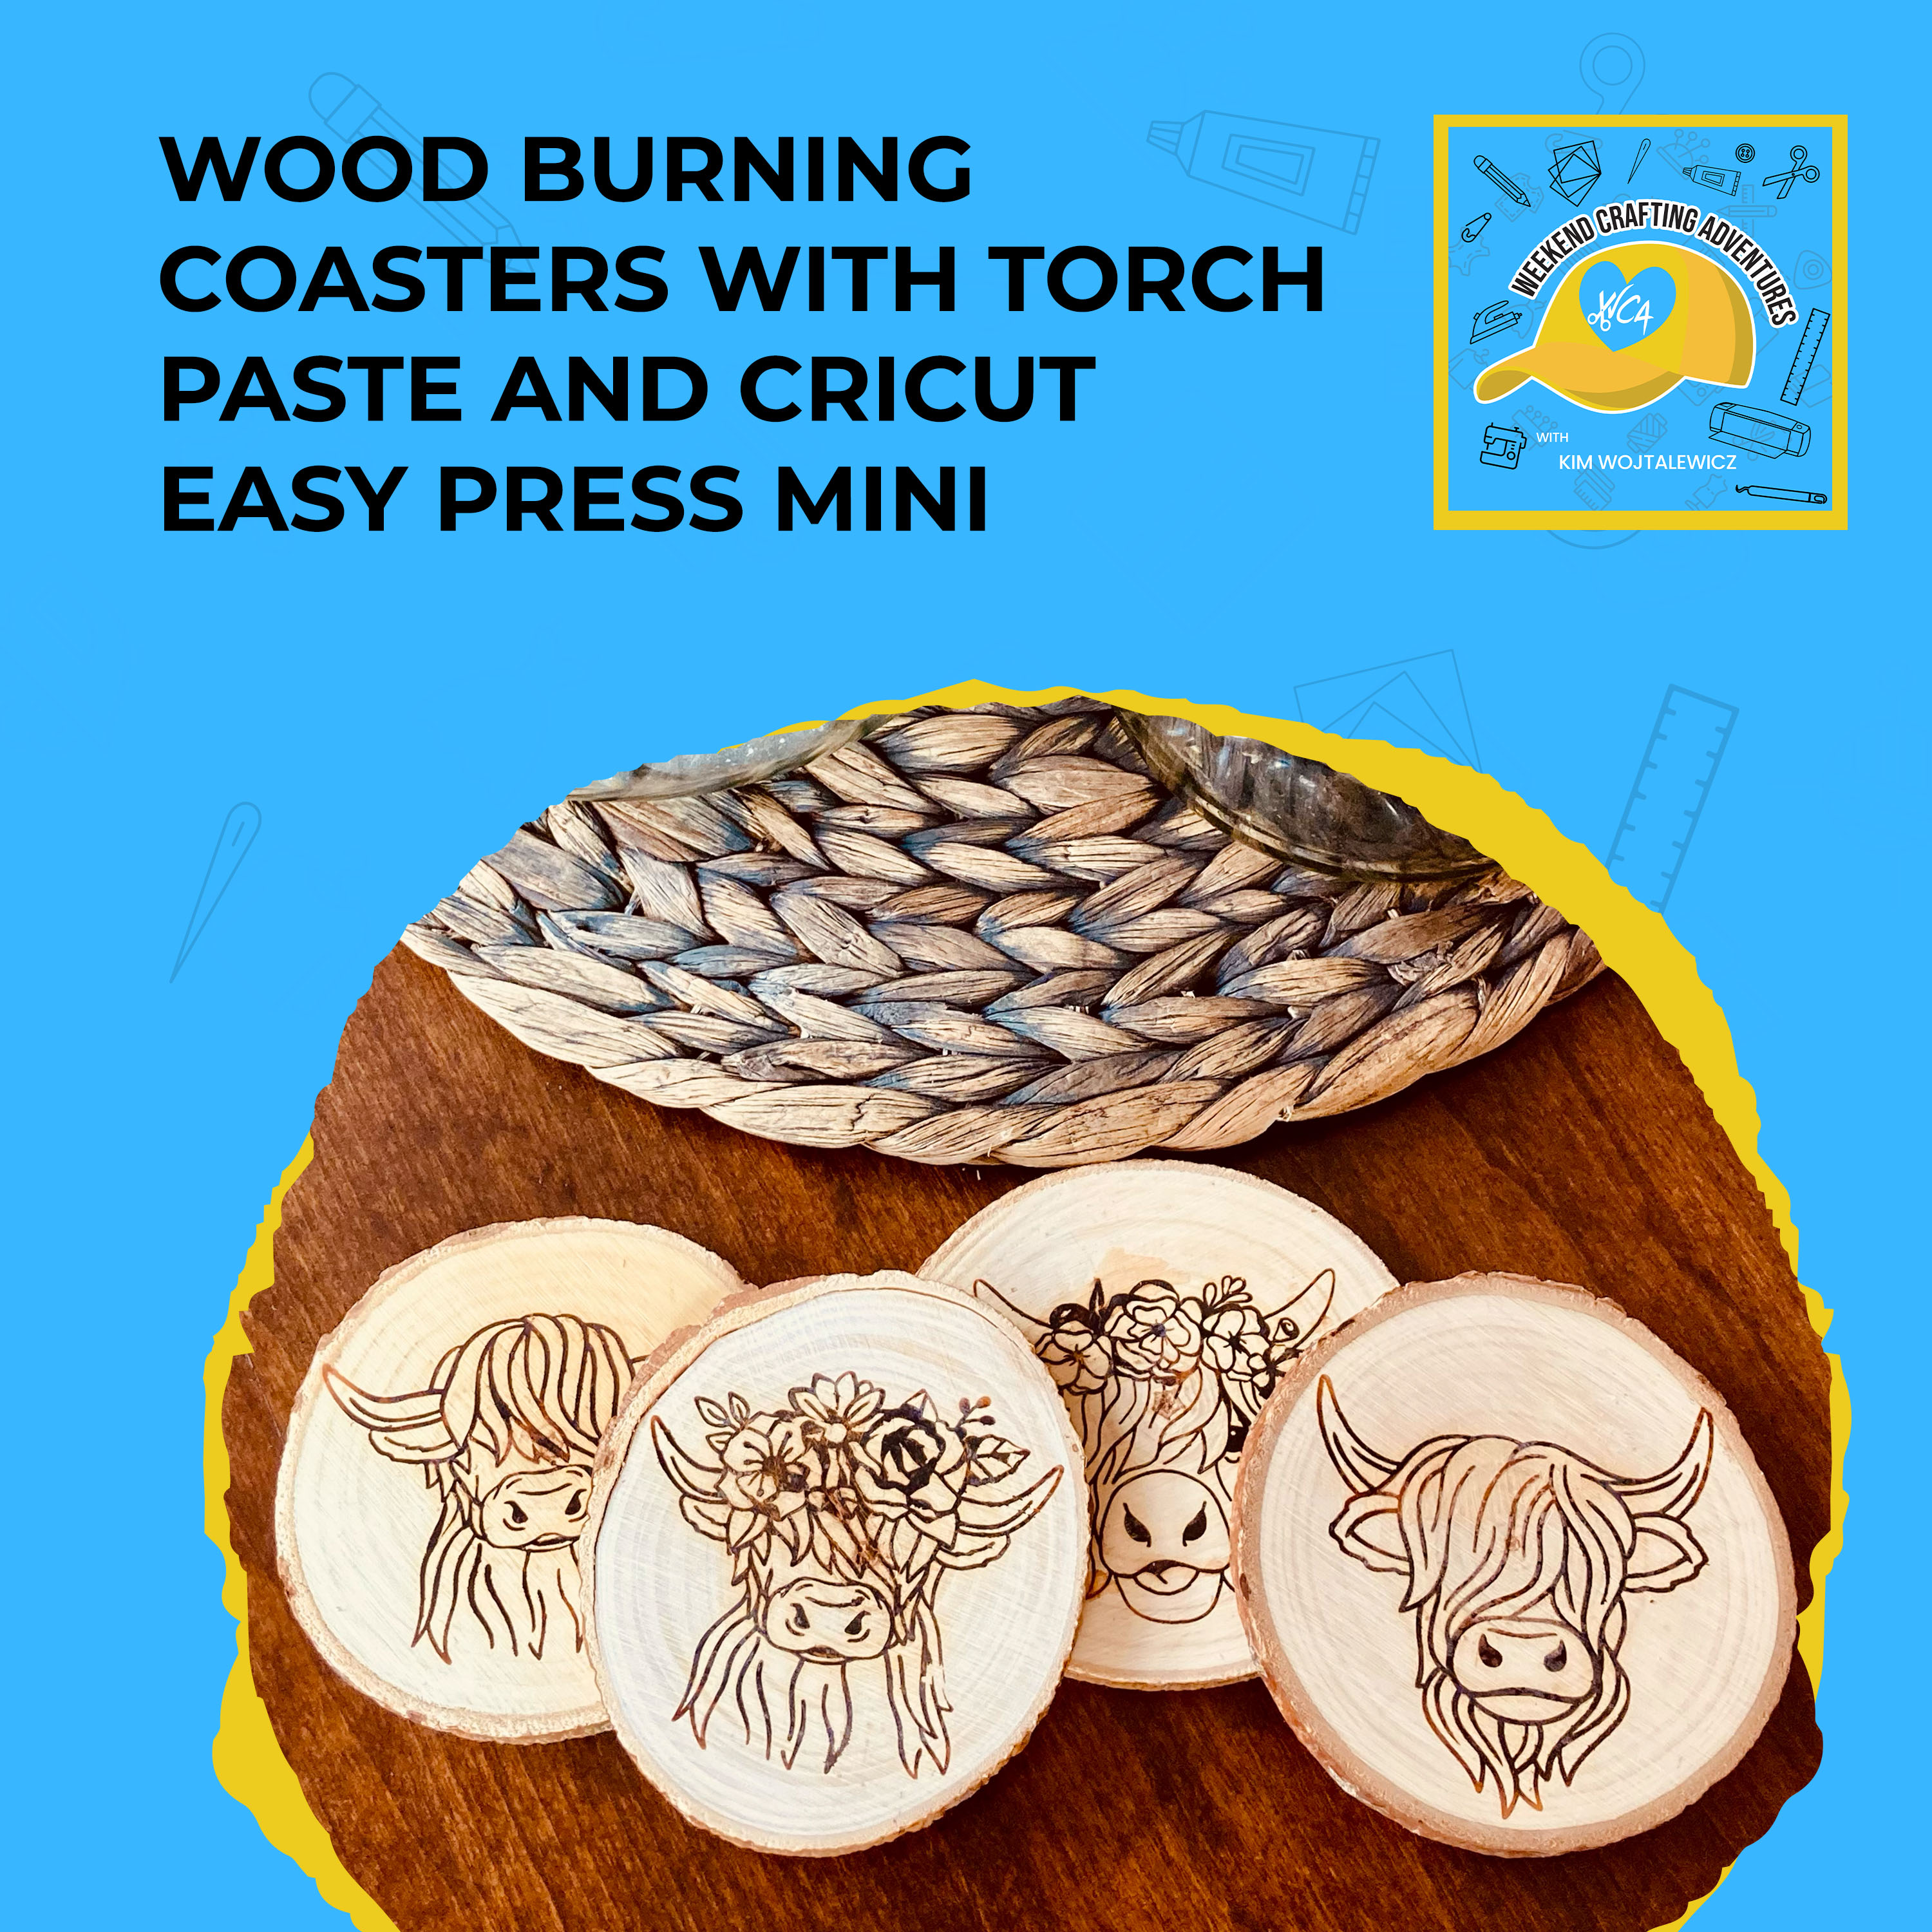  Torch Paste - The Original Wood Burning Paste